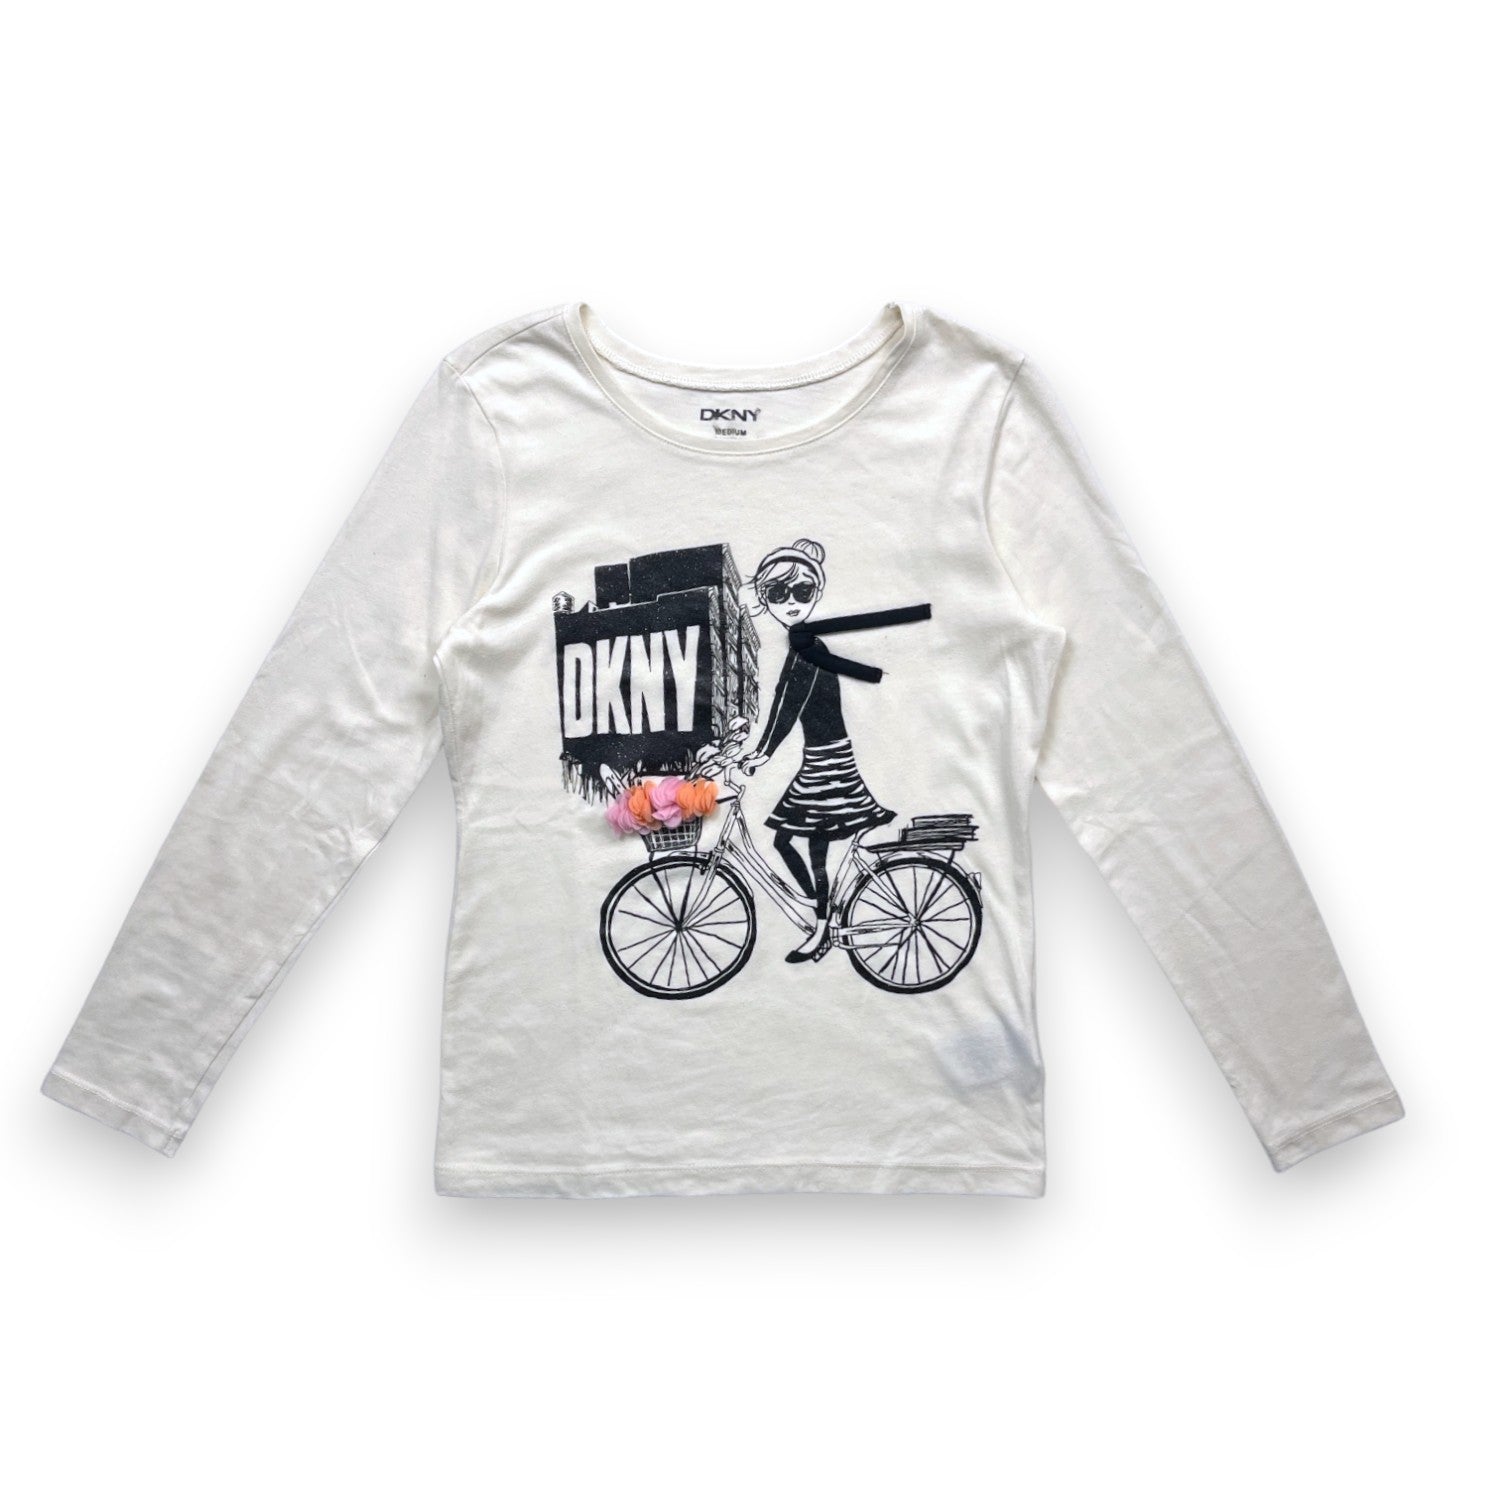 DKNY - T-shirt manches longues écru à motifs - 10 ans